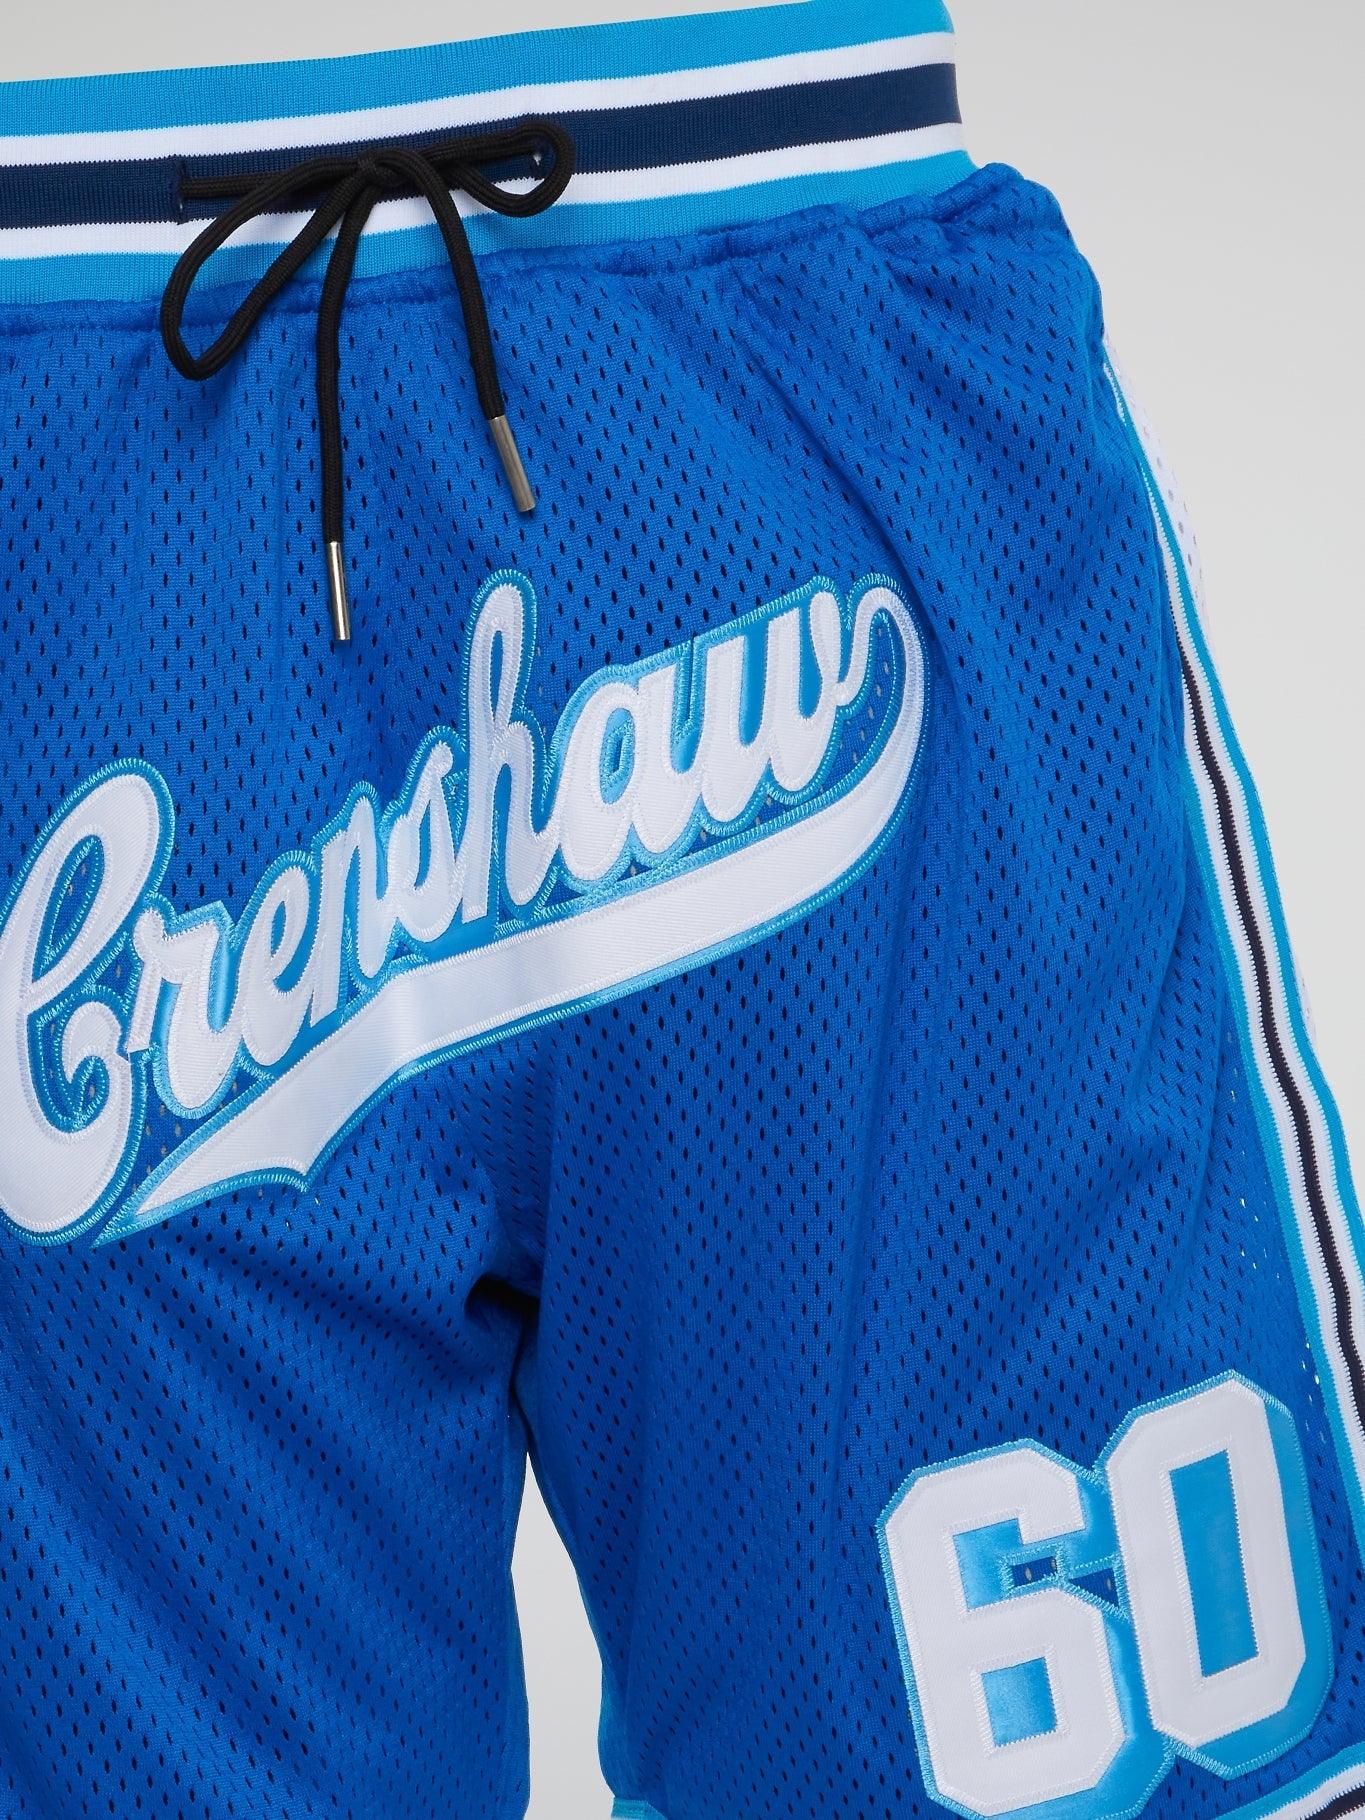 Crenshaw Sky Blue Alt Shorts - B-Hype Society